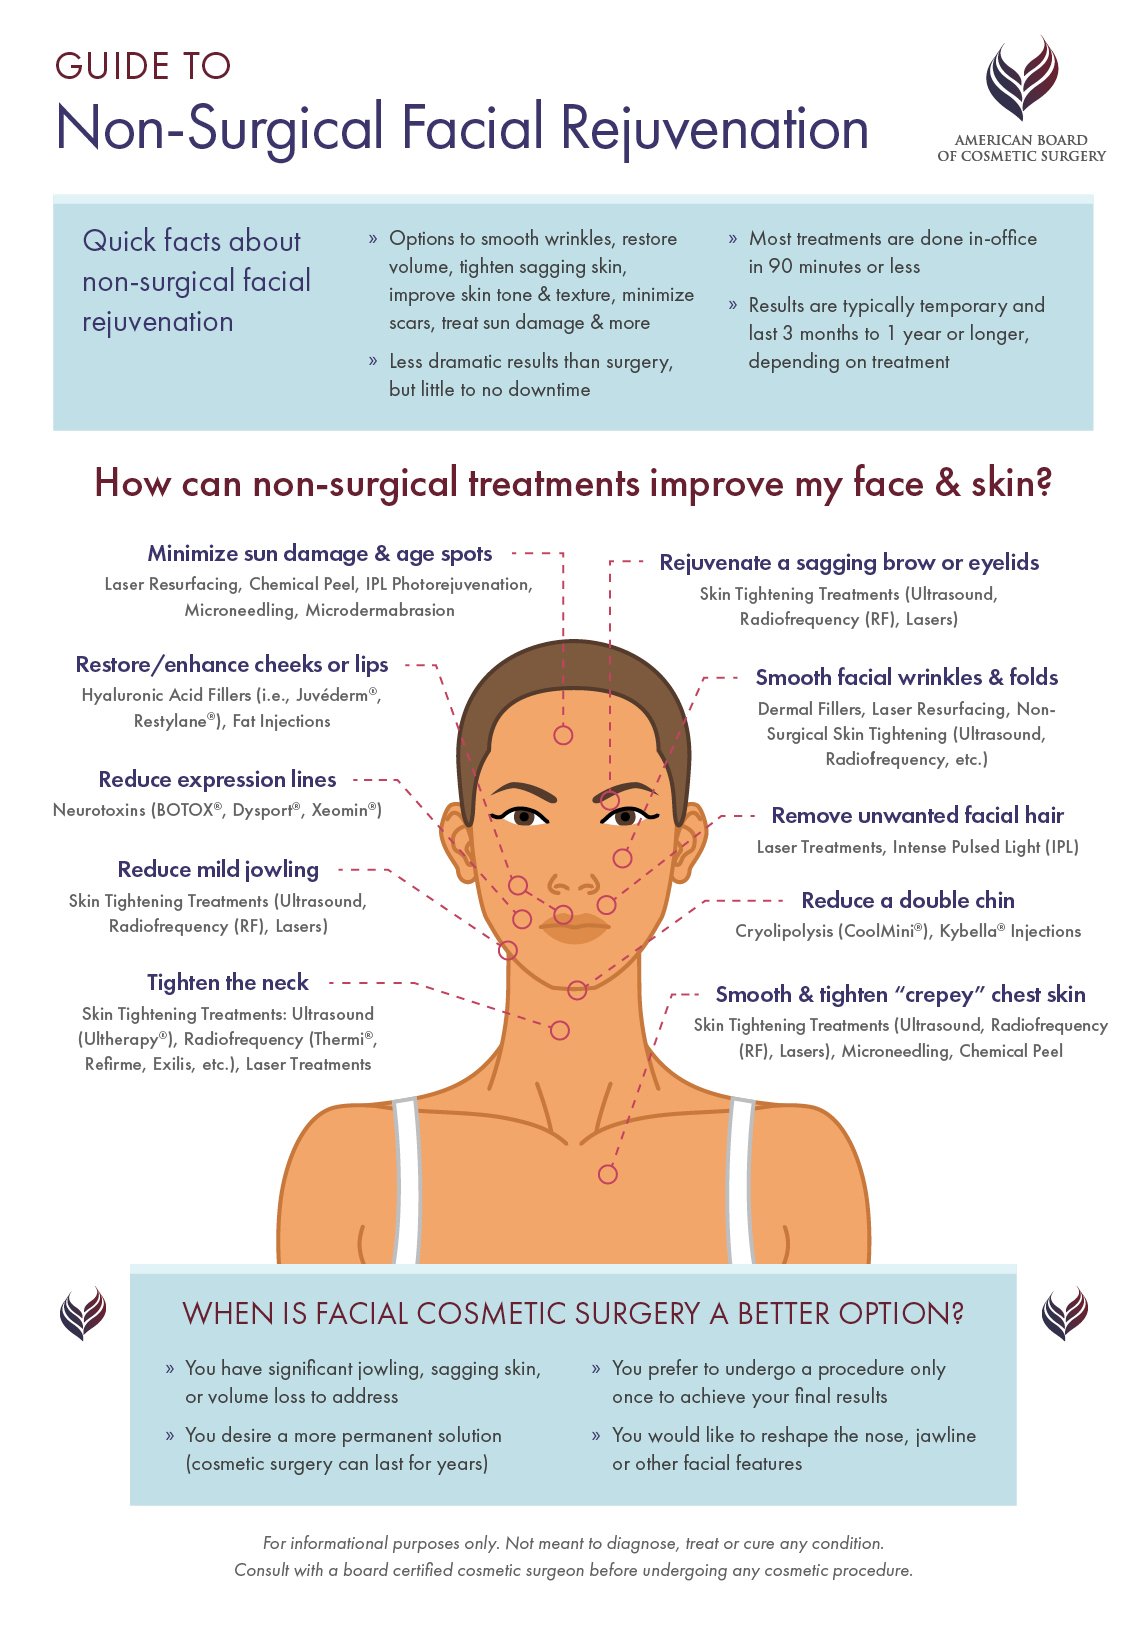 Guide to Non-Surgical Facial Rejuvenation